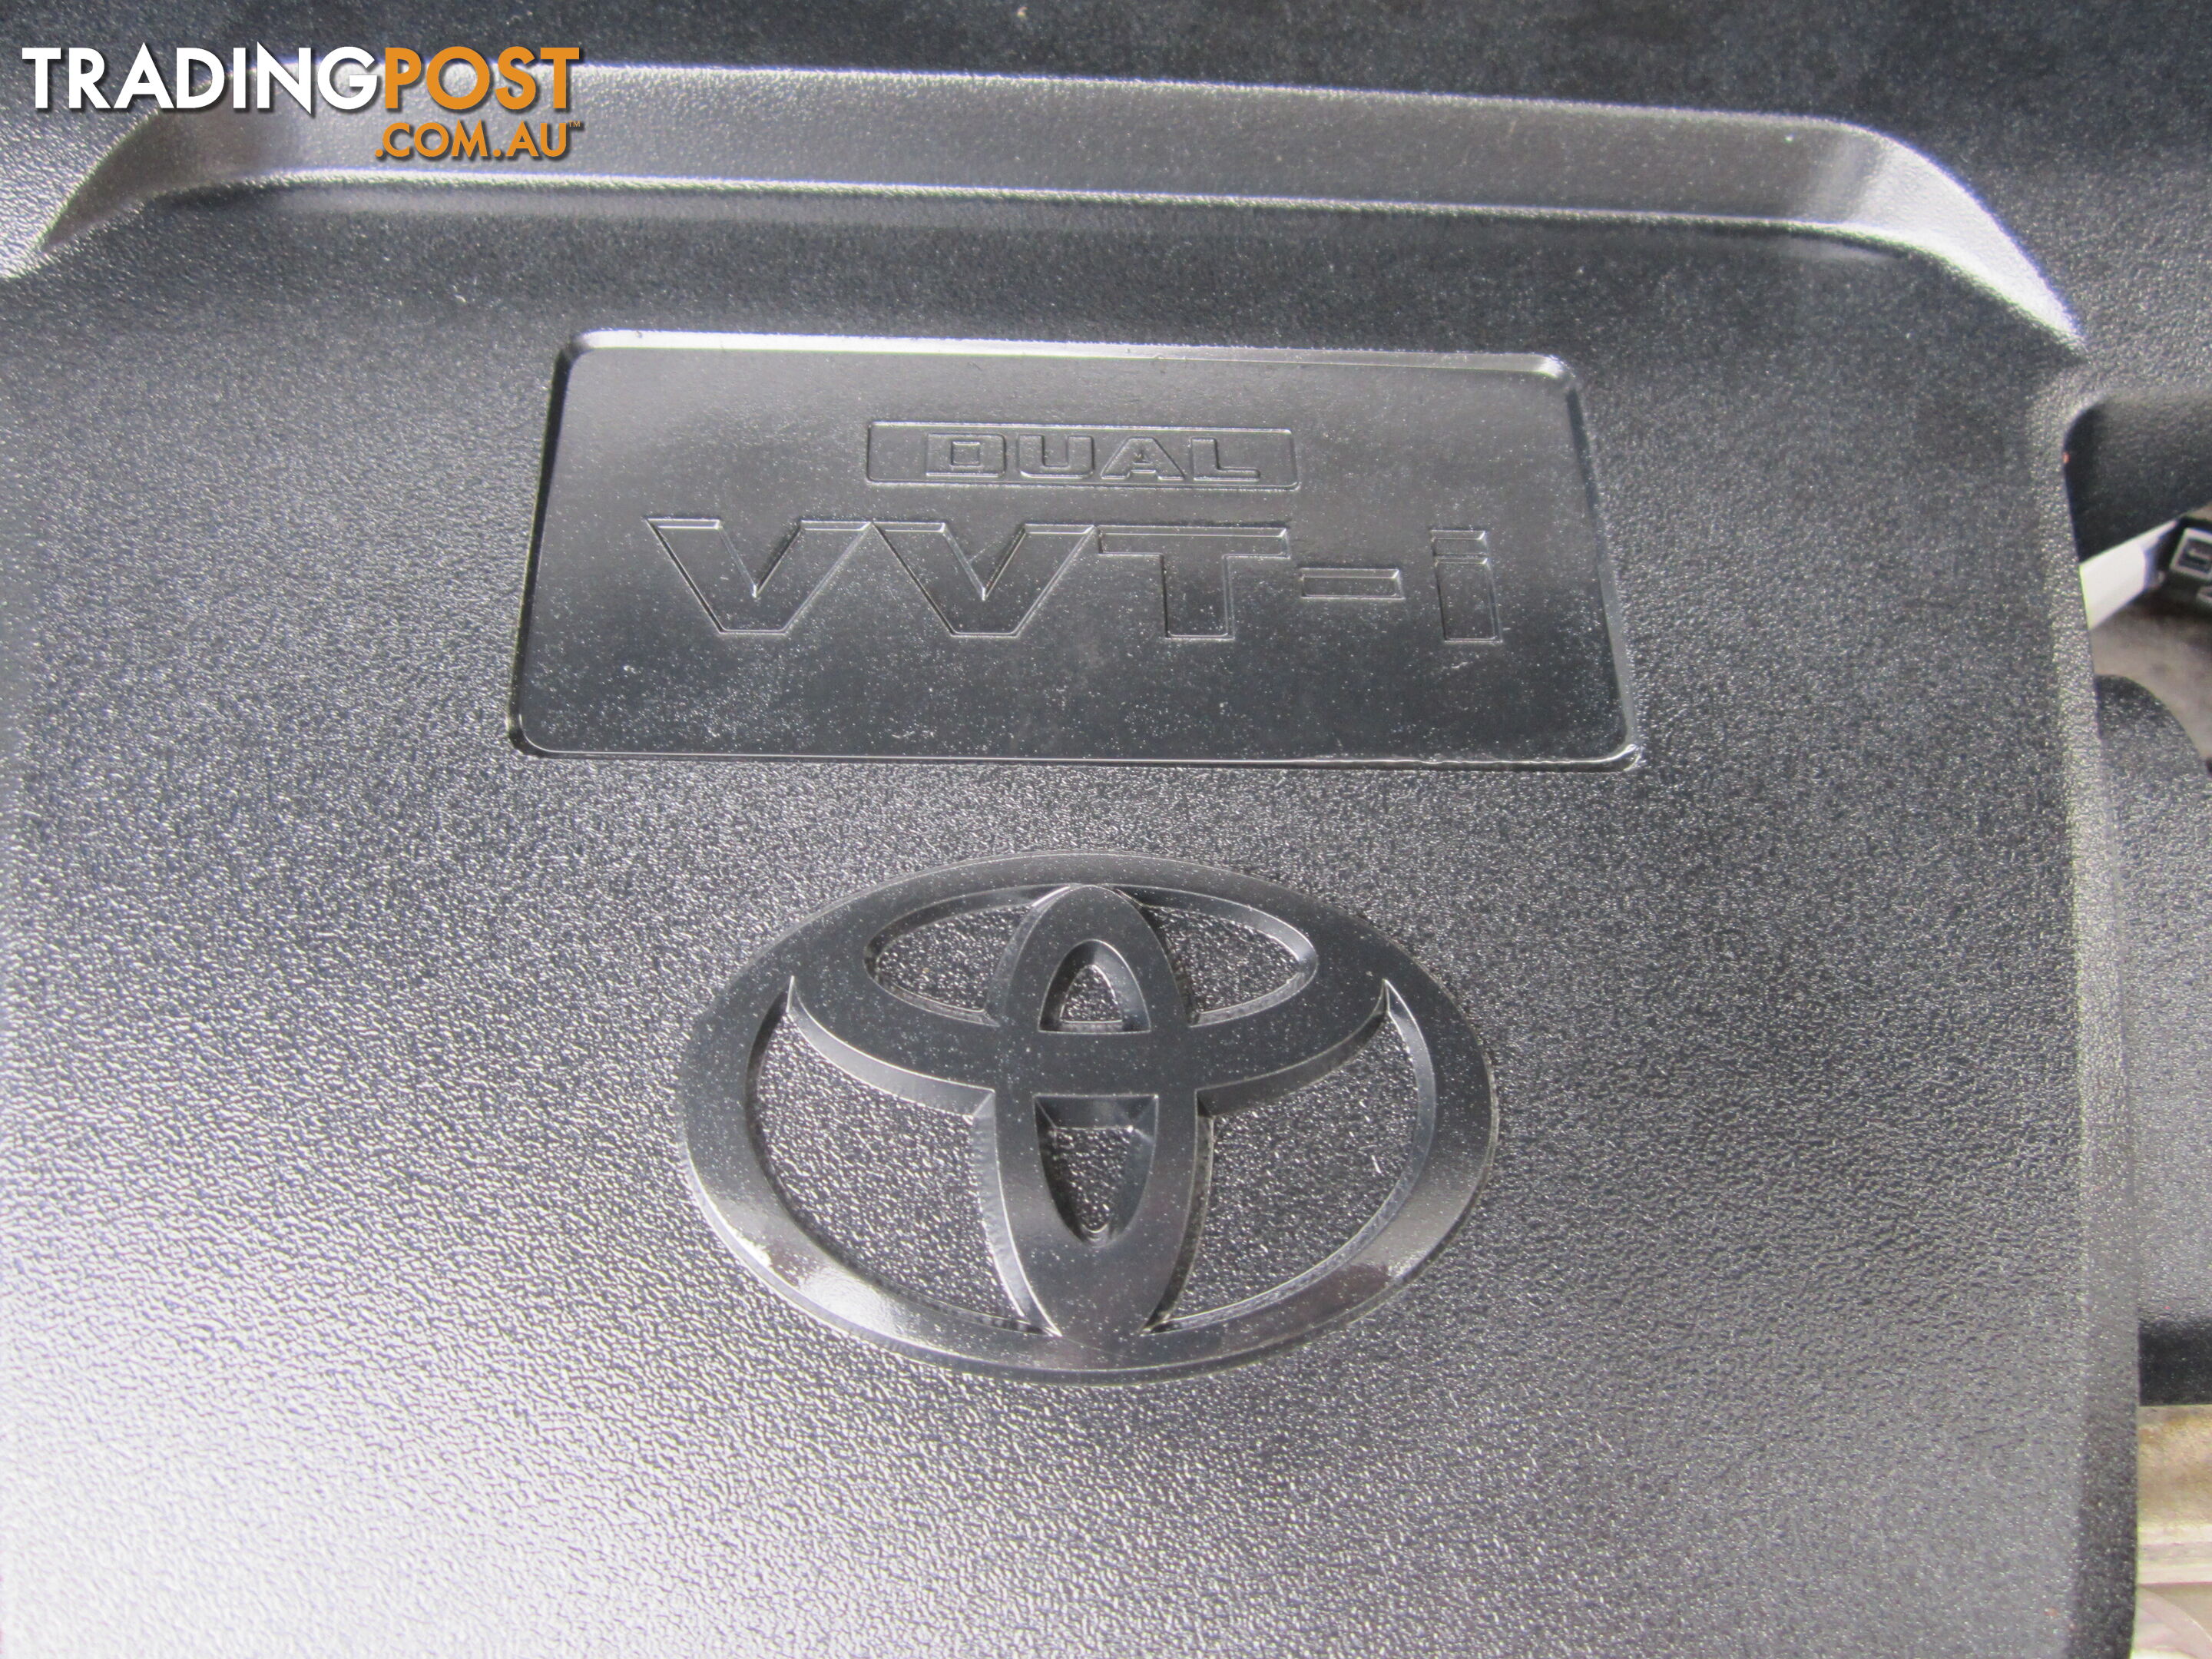 2014 Toyota RAV4 ASA44R 4X4 Wagon Automatic